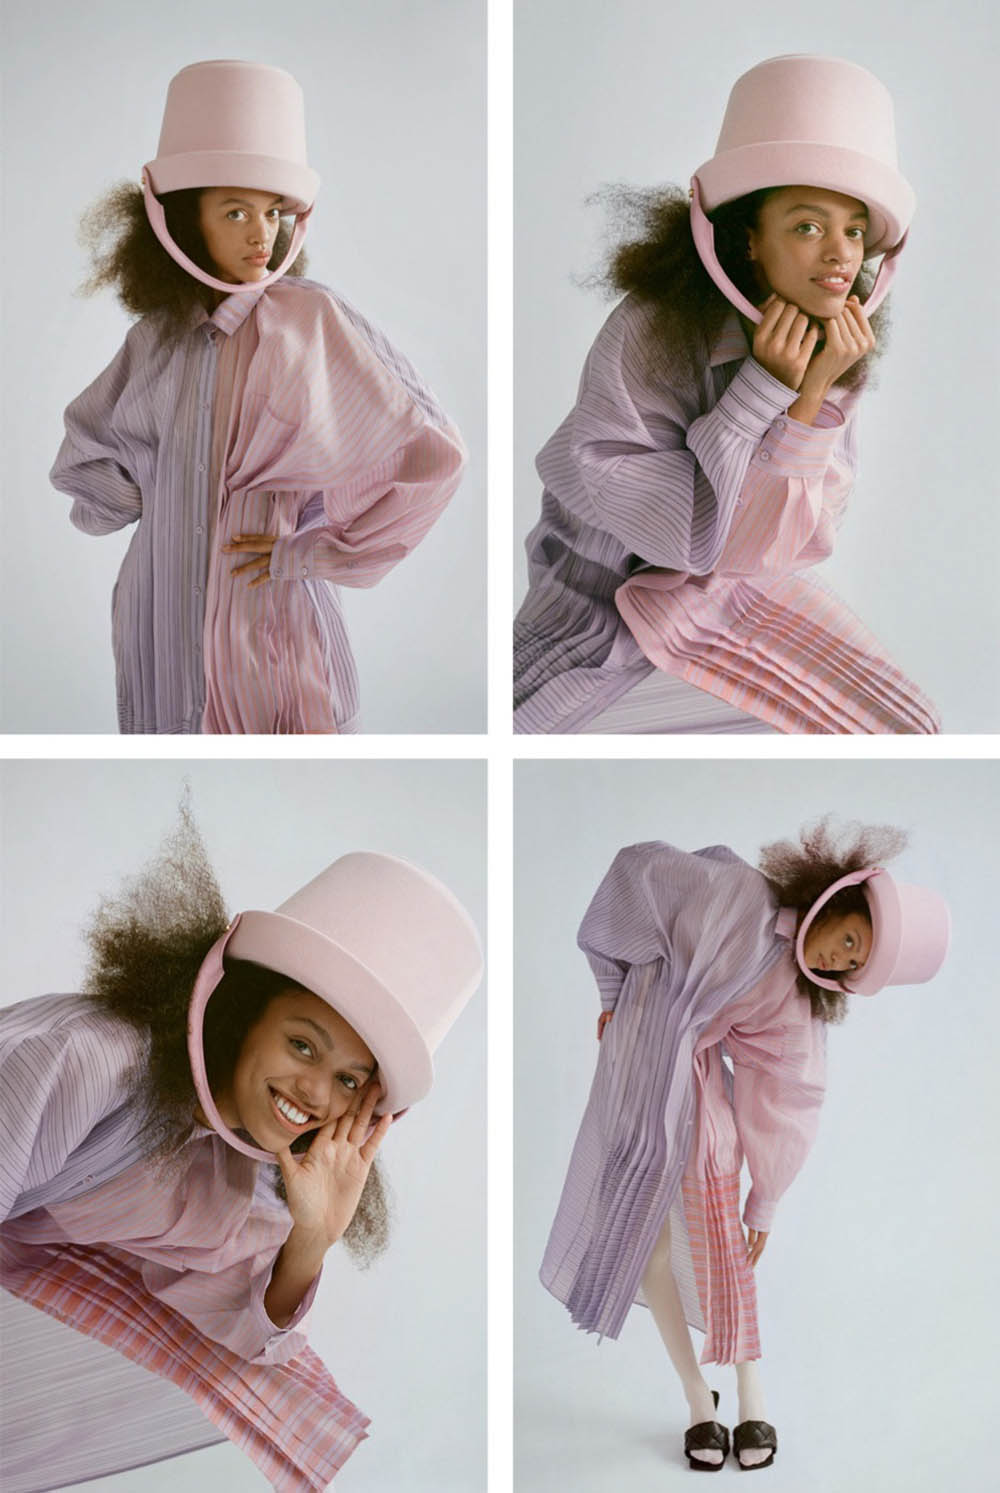 Kukua Williams by Agata Pospieszynska for Vogue Russia April 2020